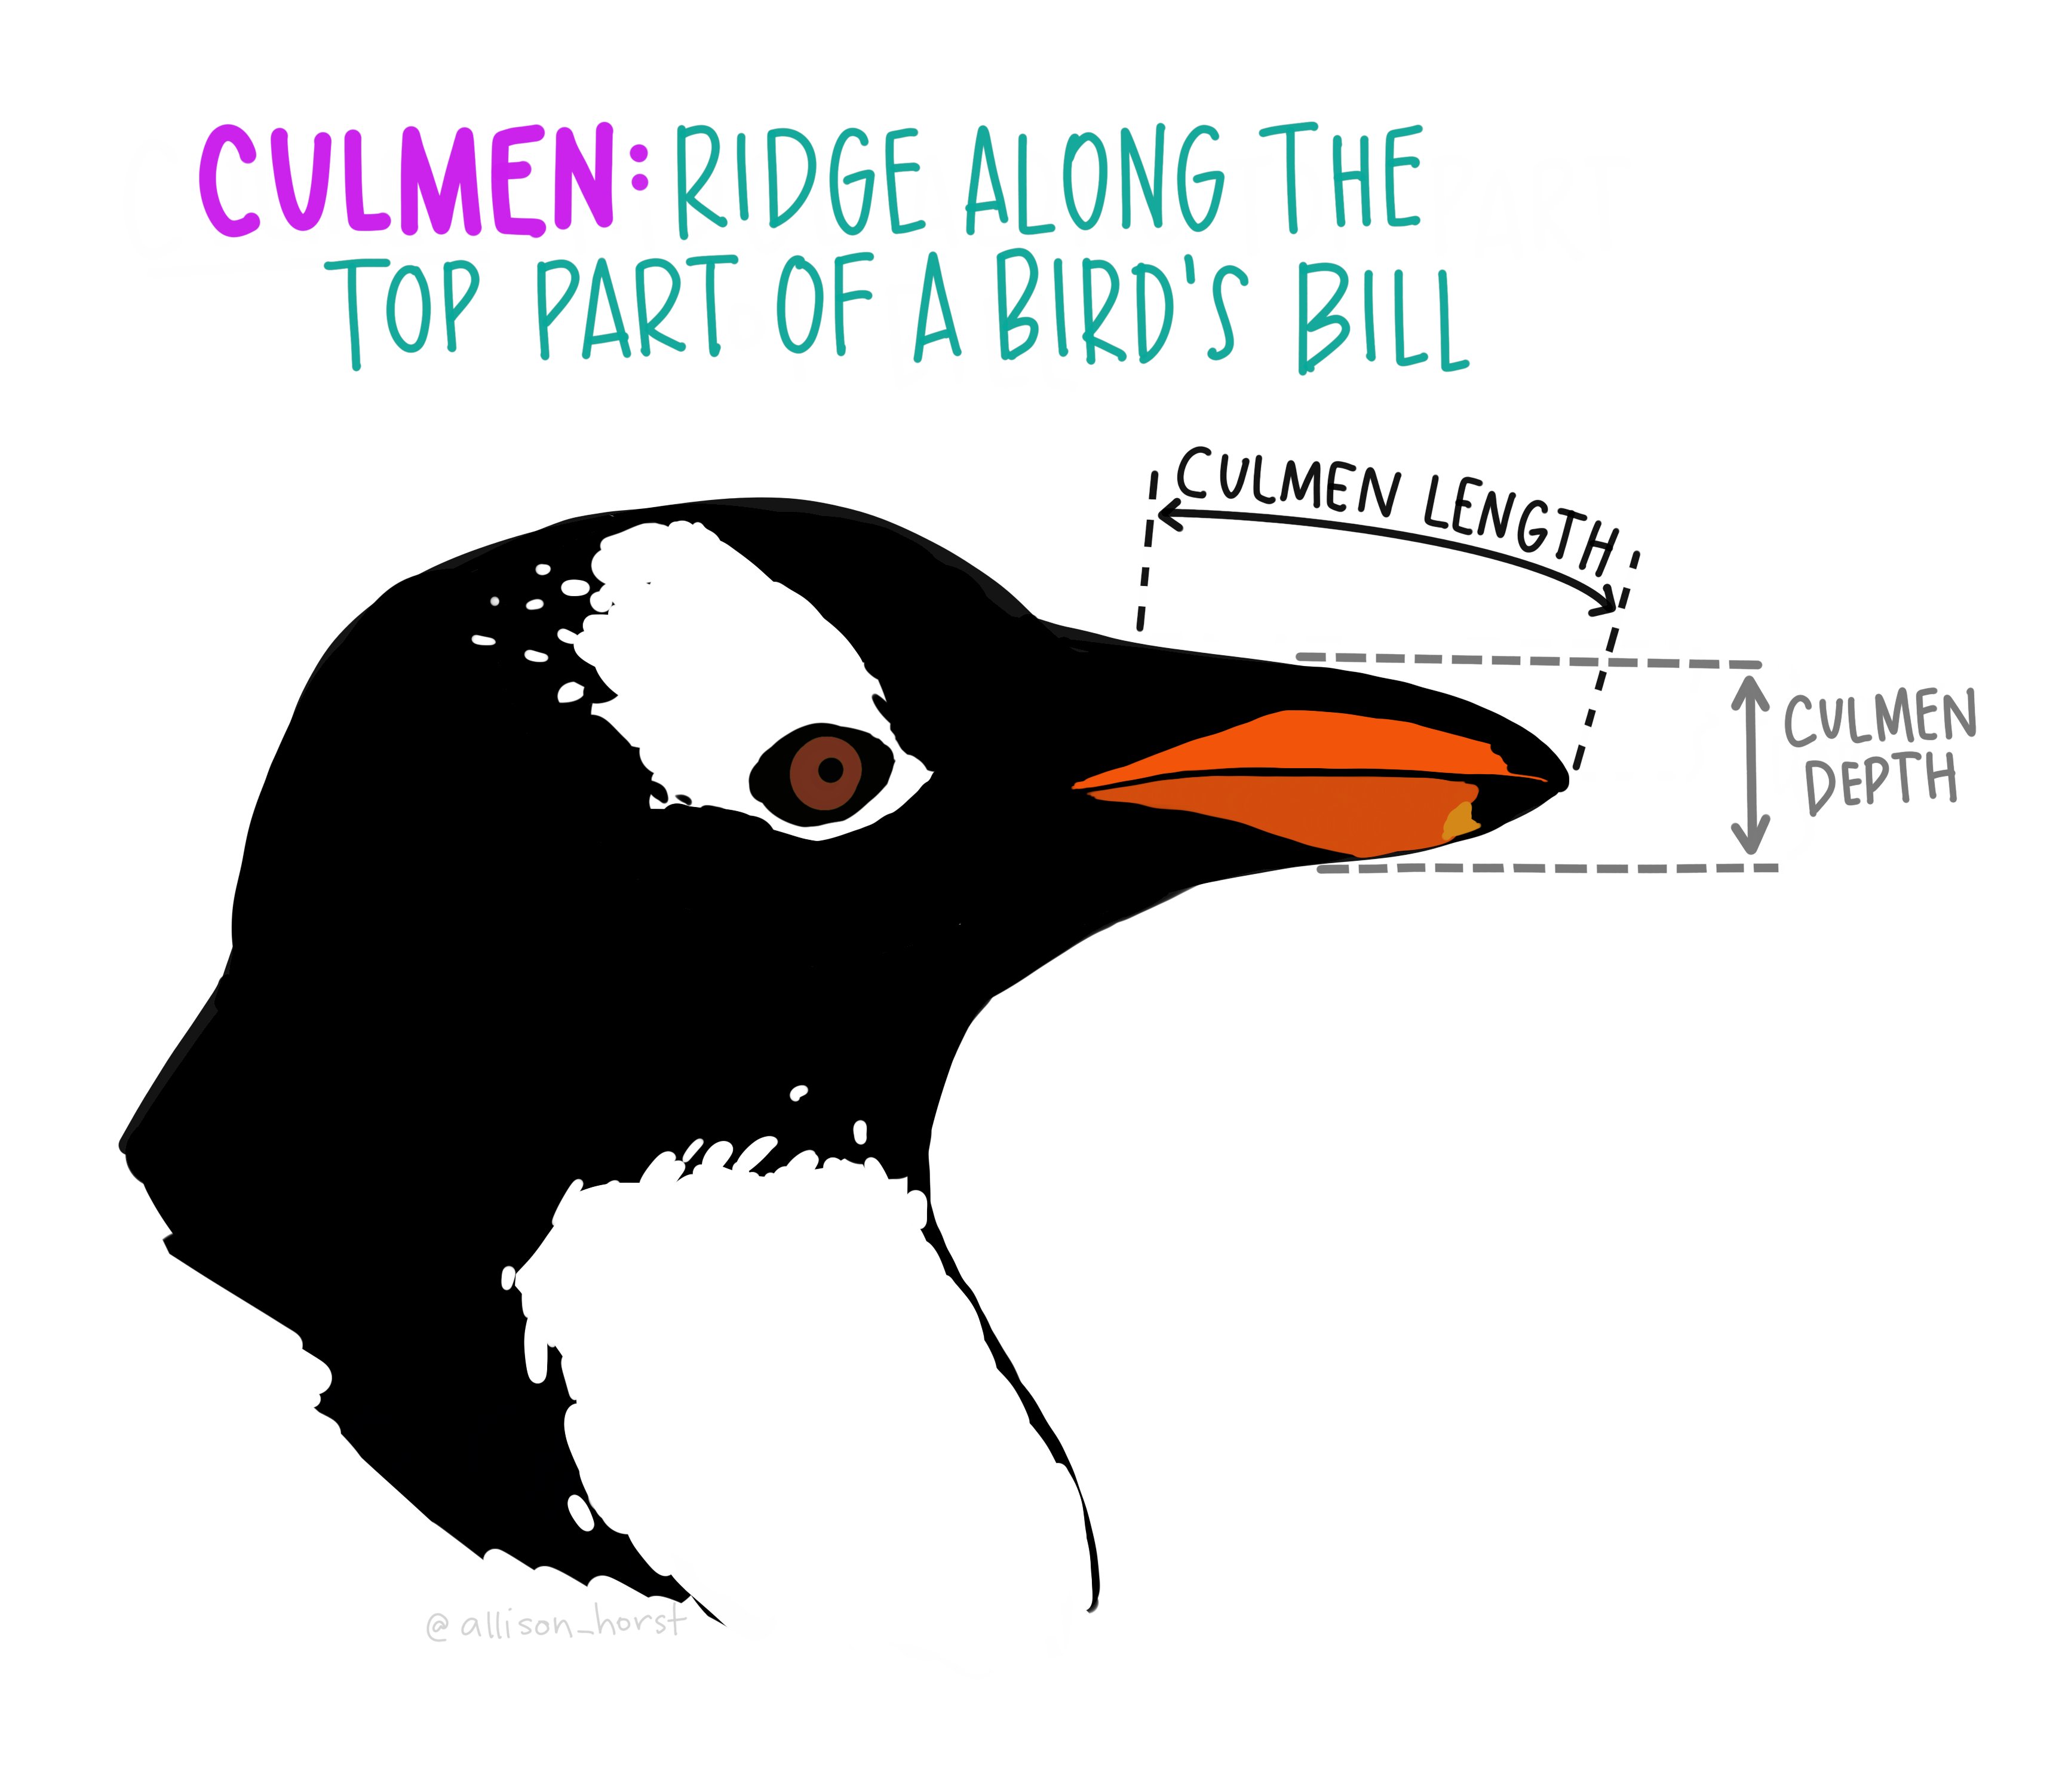 An illustration of the penguin, with annotations explaining the culmen length and culmen depth. The culmen is the upper ridge of a bird's beak